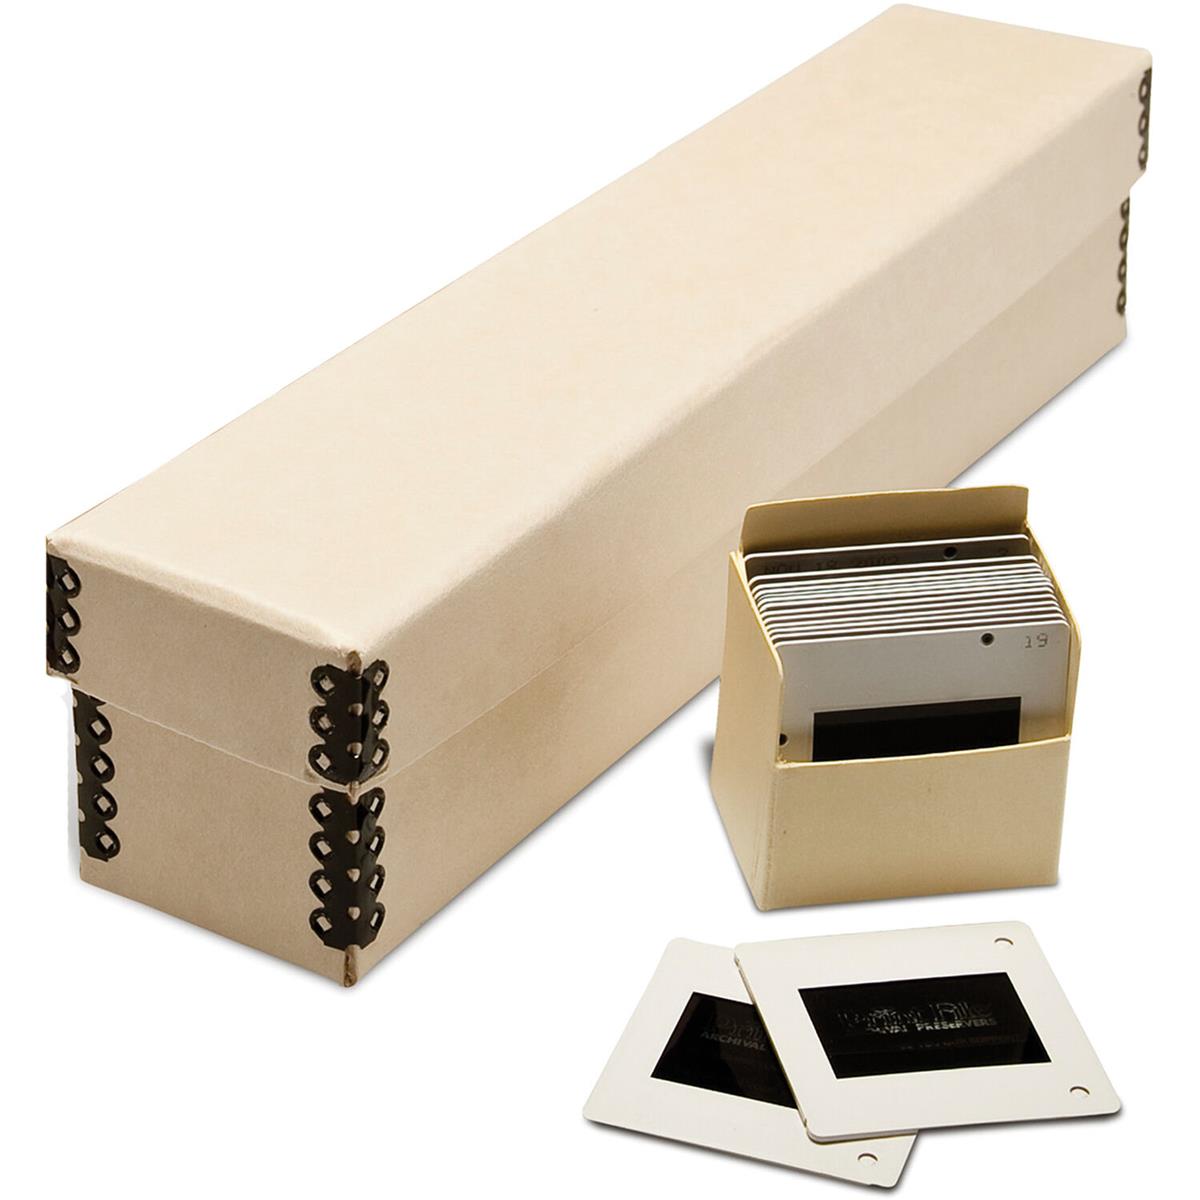 Image of Print File Slide Storage Box with 8 Archival Slide Bins